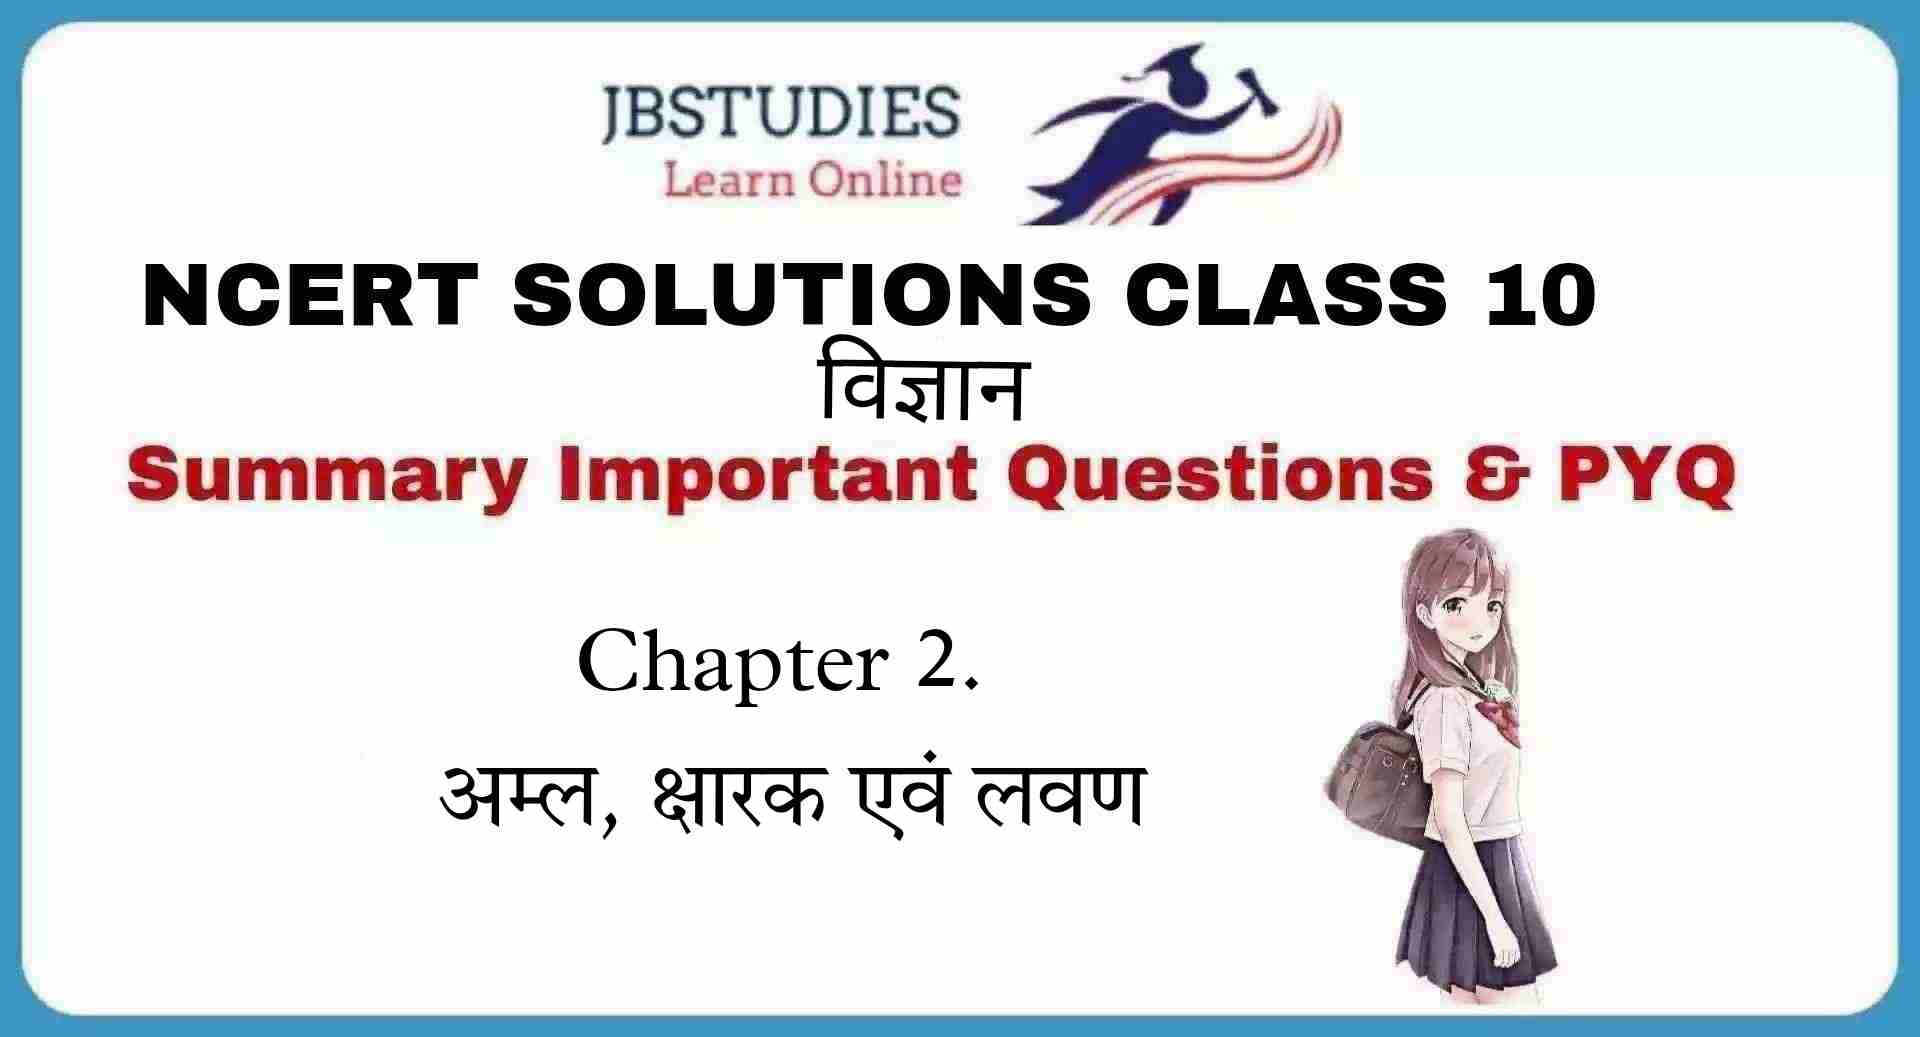 Solutions Class 10 विज्ञान Chapter-2 (अम्ल, क्षार एवं लवण)